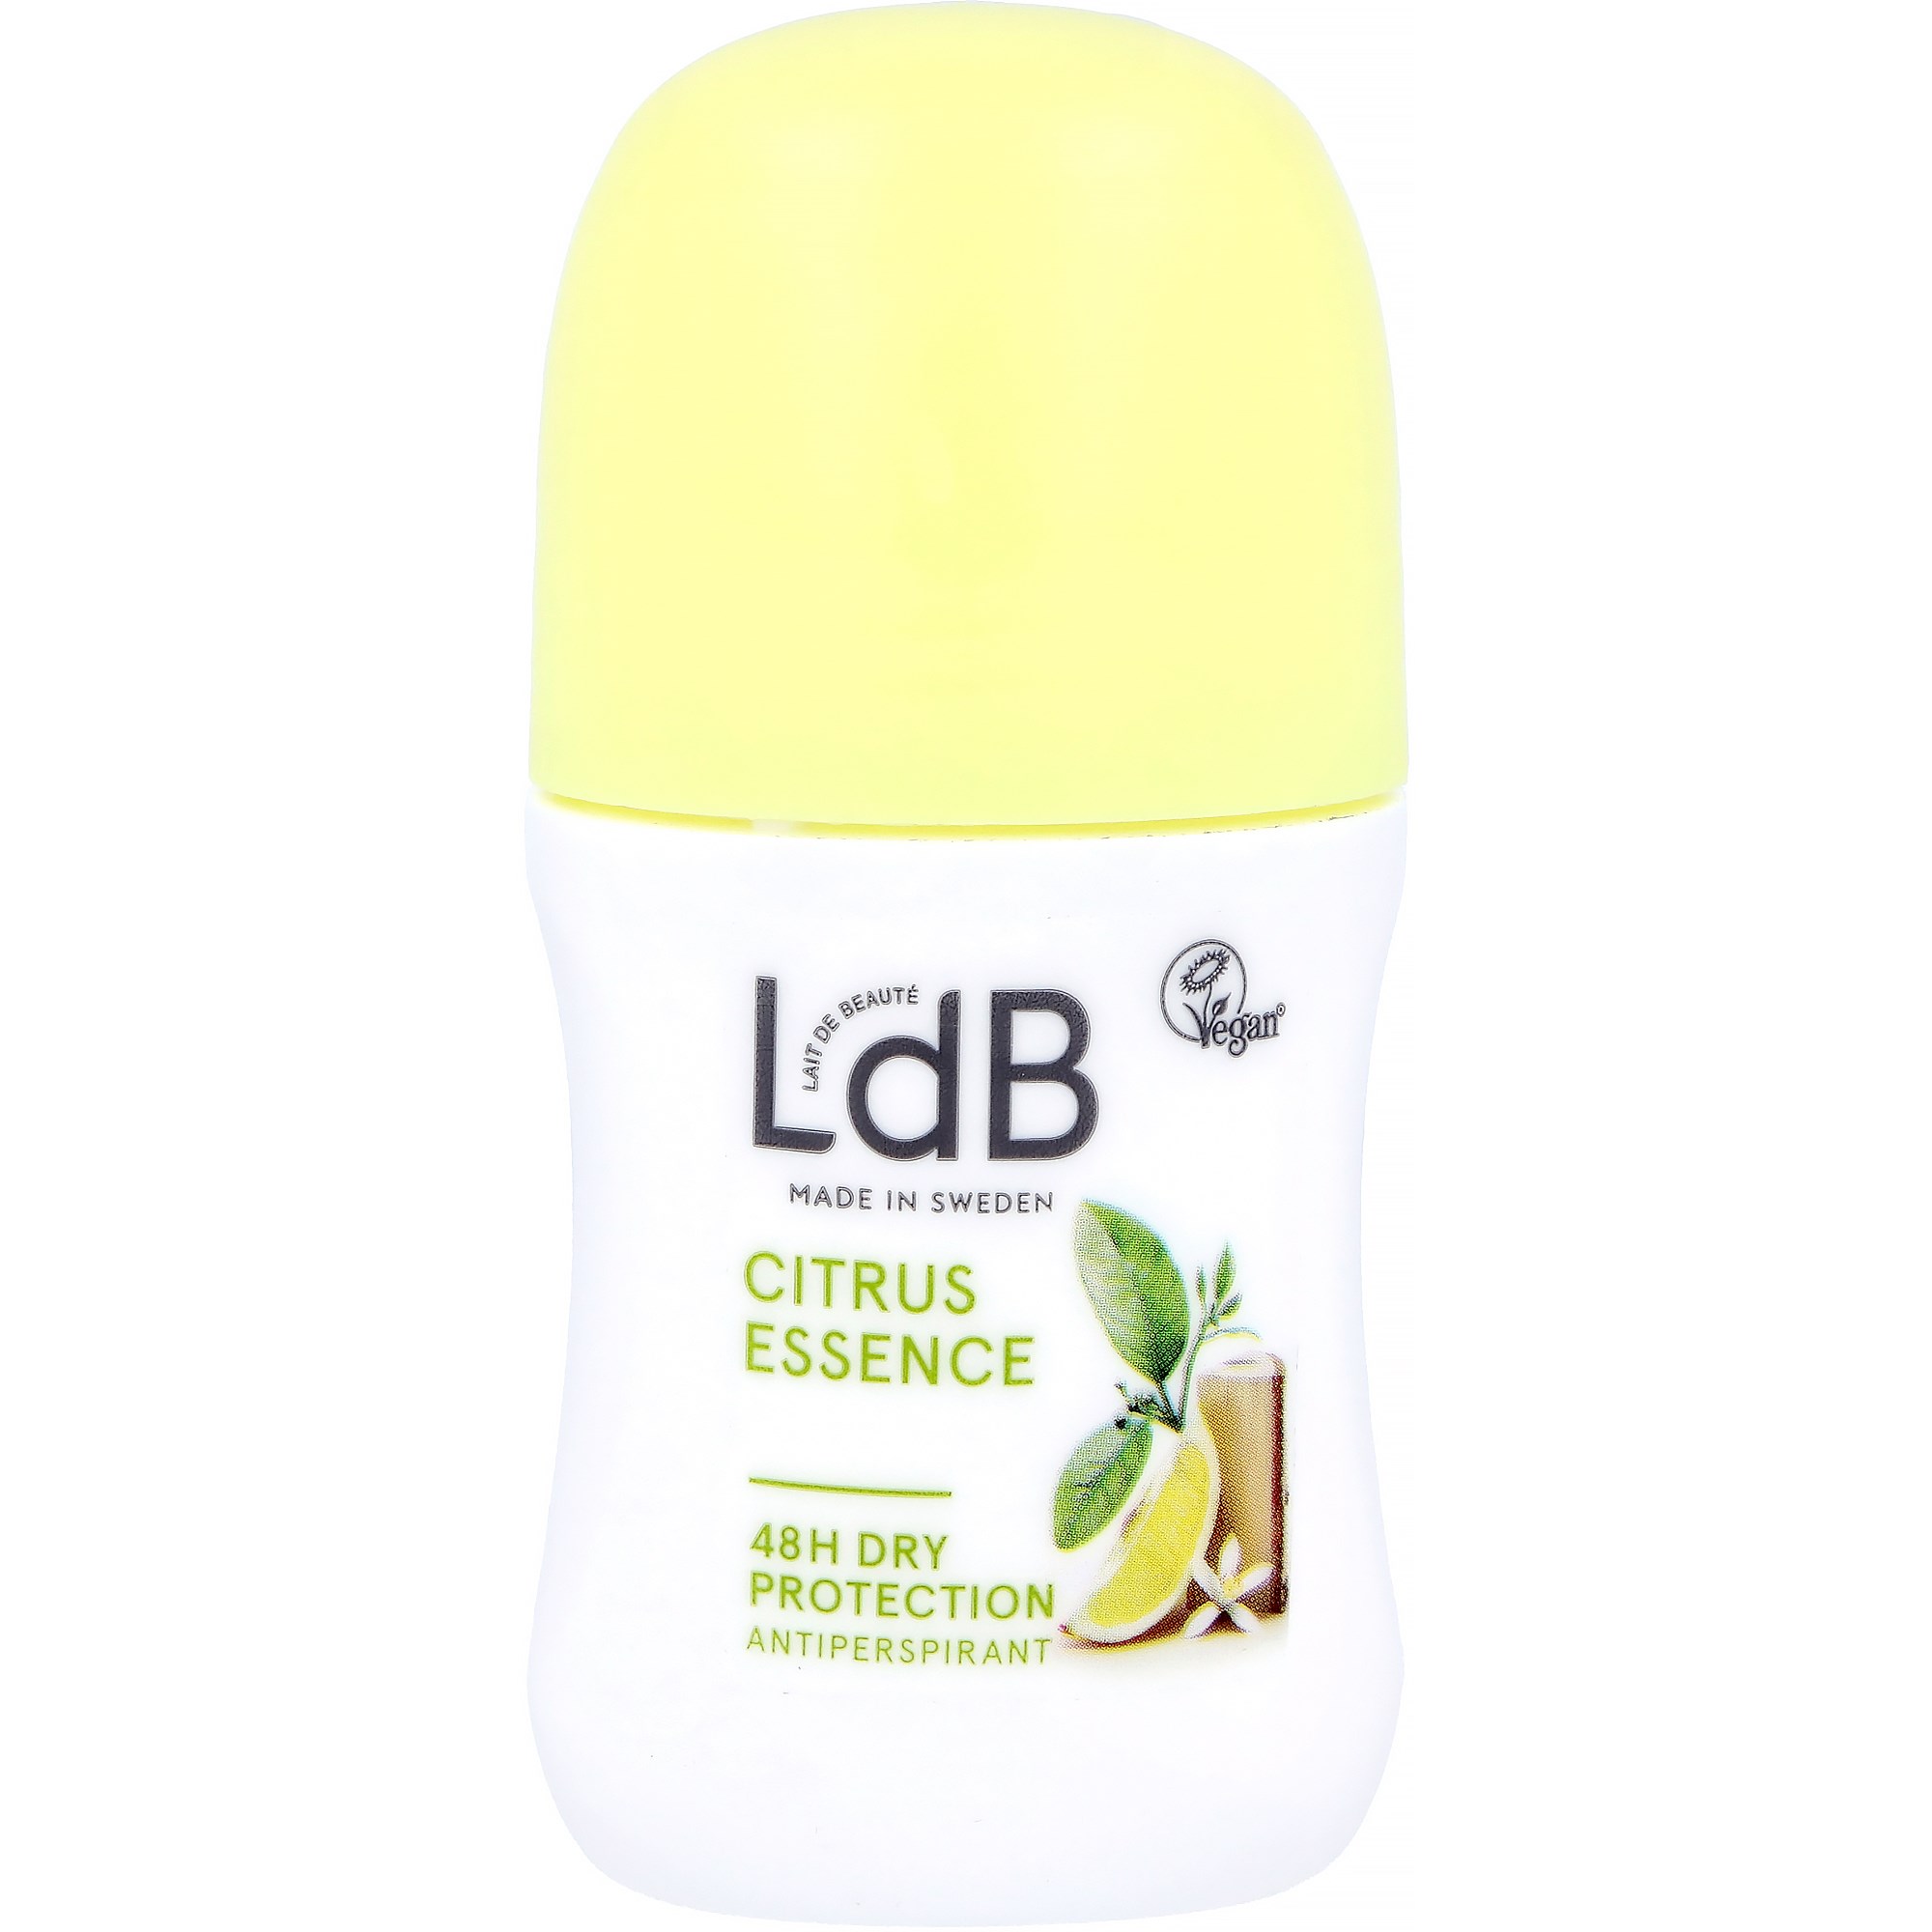 Bilde av Ldb Citrus Essence 48h Dry Protection Anti-perspirant 60 Ml